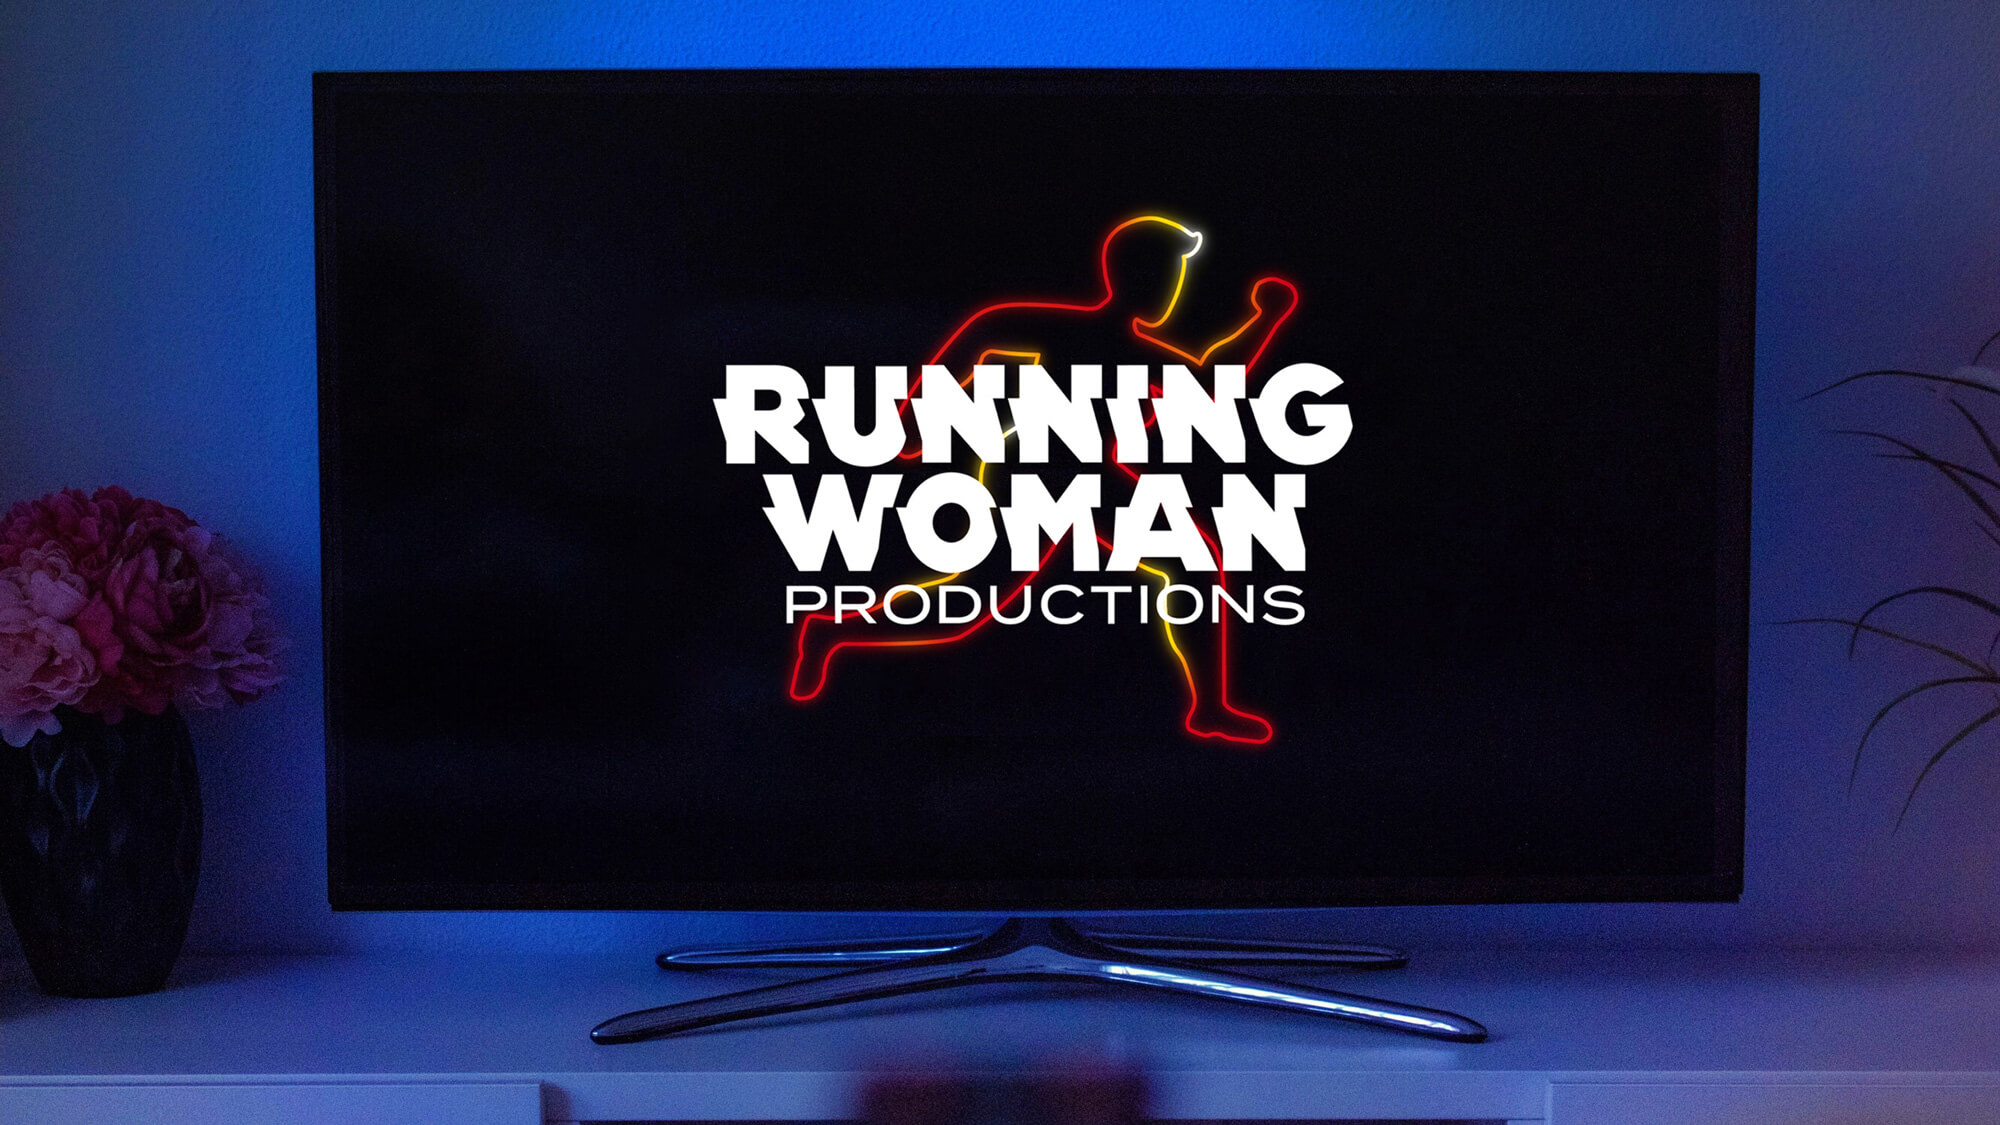 The Running Woman Logo on a flat screen TV